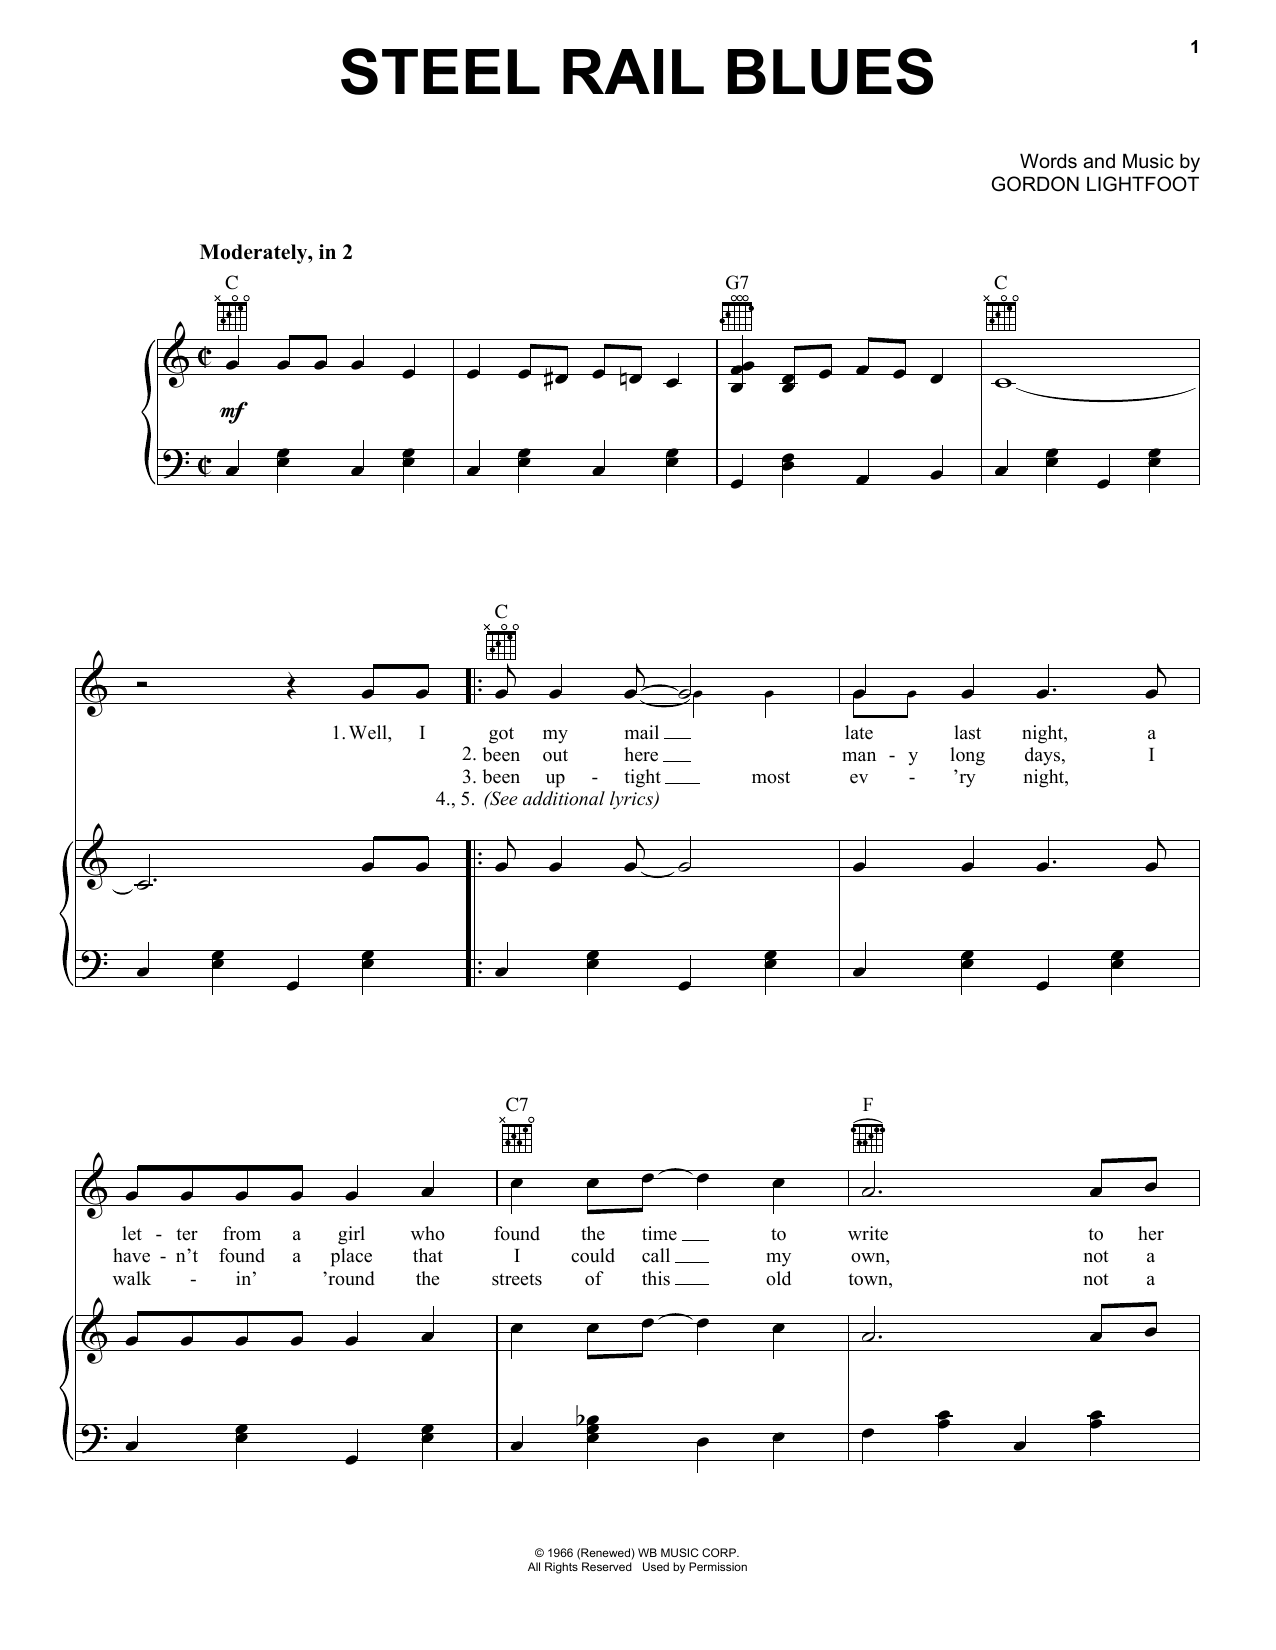 Gordon Lightfoot Steel Rail Blues Sheet Music Notes & Chords for Lyrics & Chords - Download or Print PDF